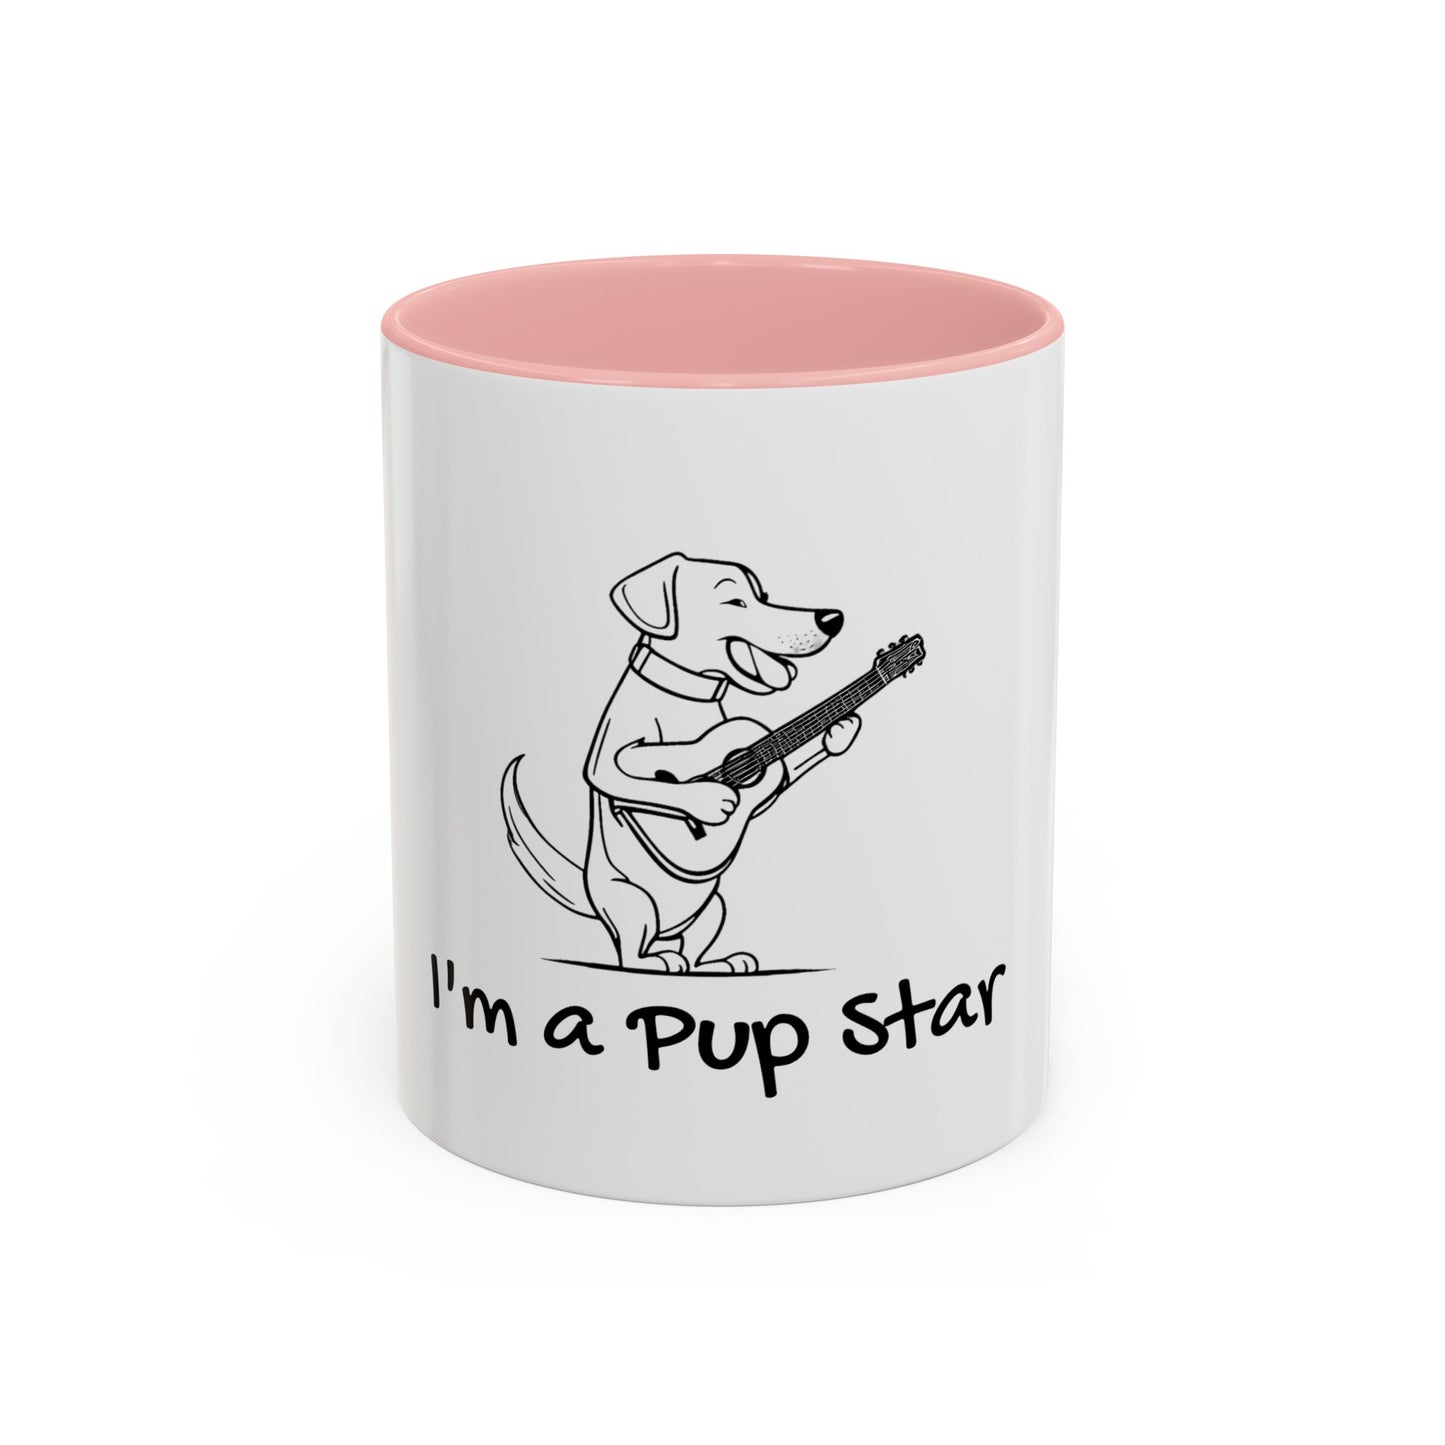 Dog With a Guitar. I"m a Pup Star.  Time Coffee Mug, 11oz